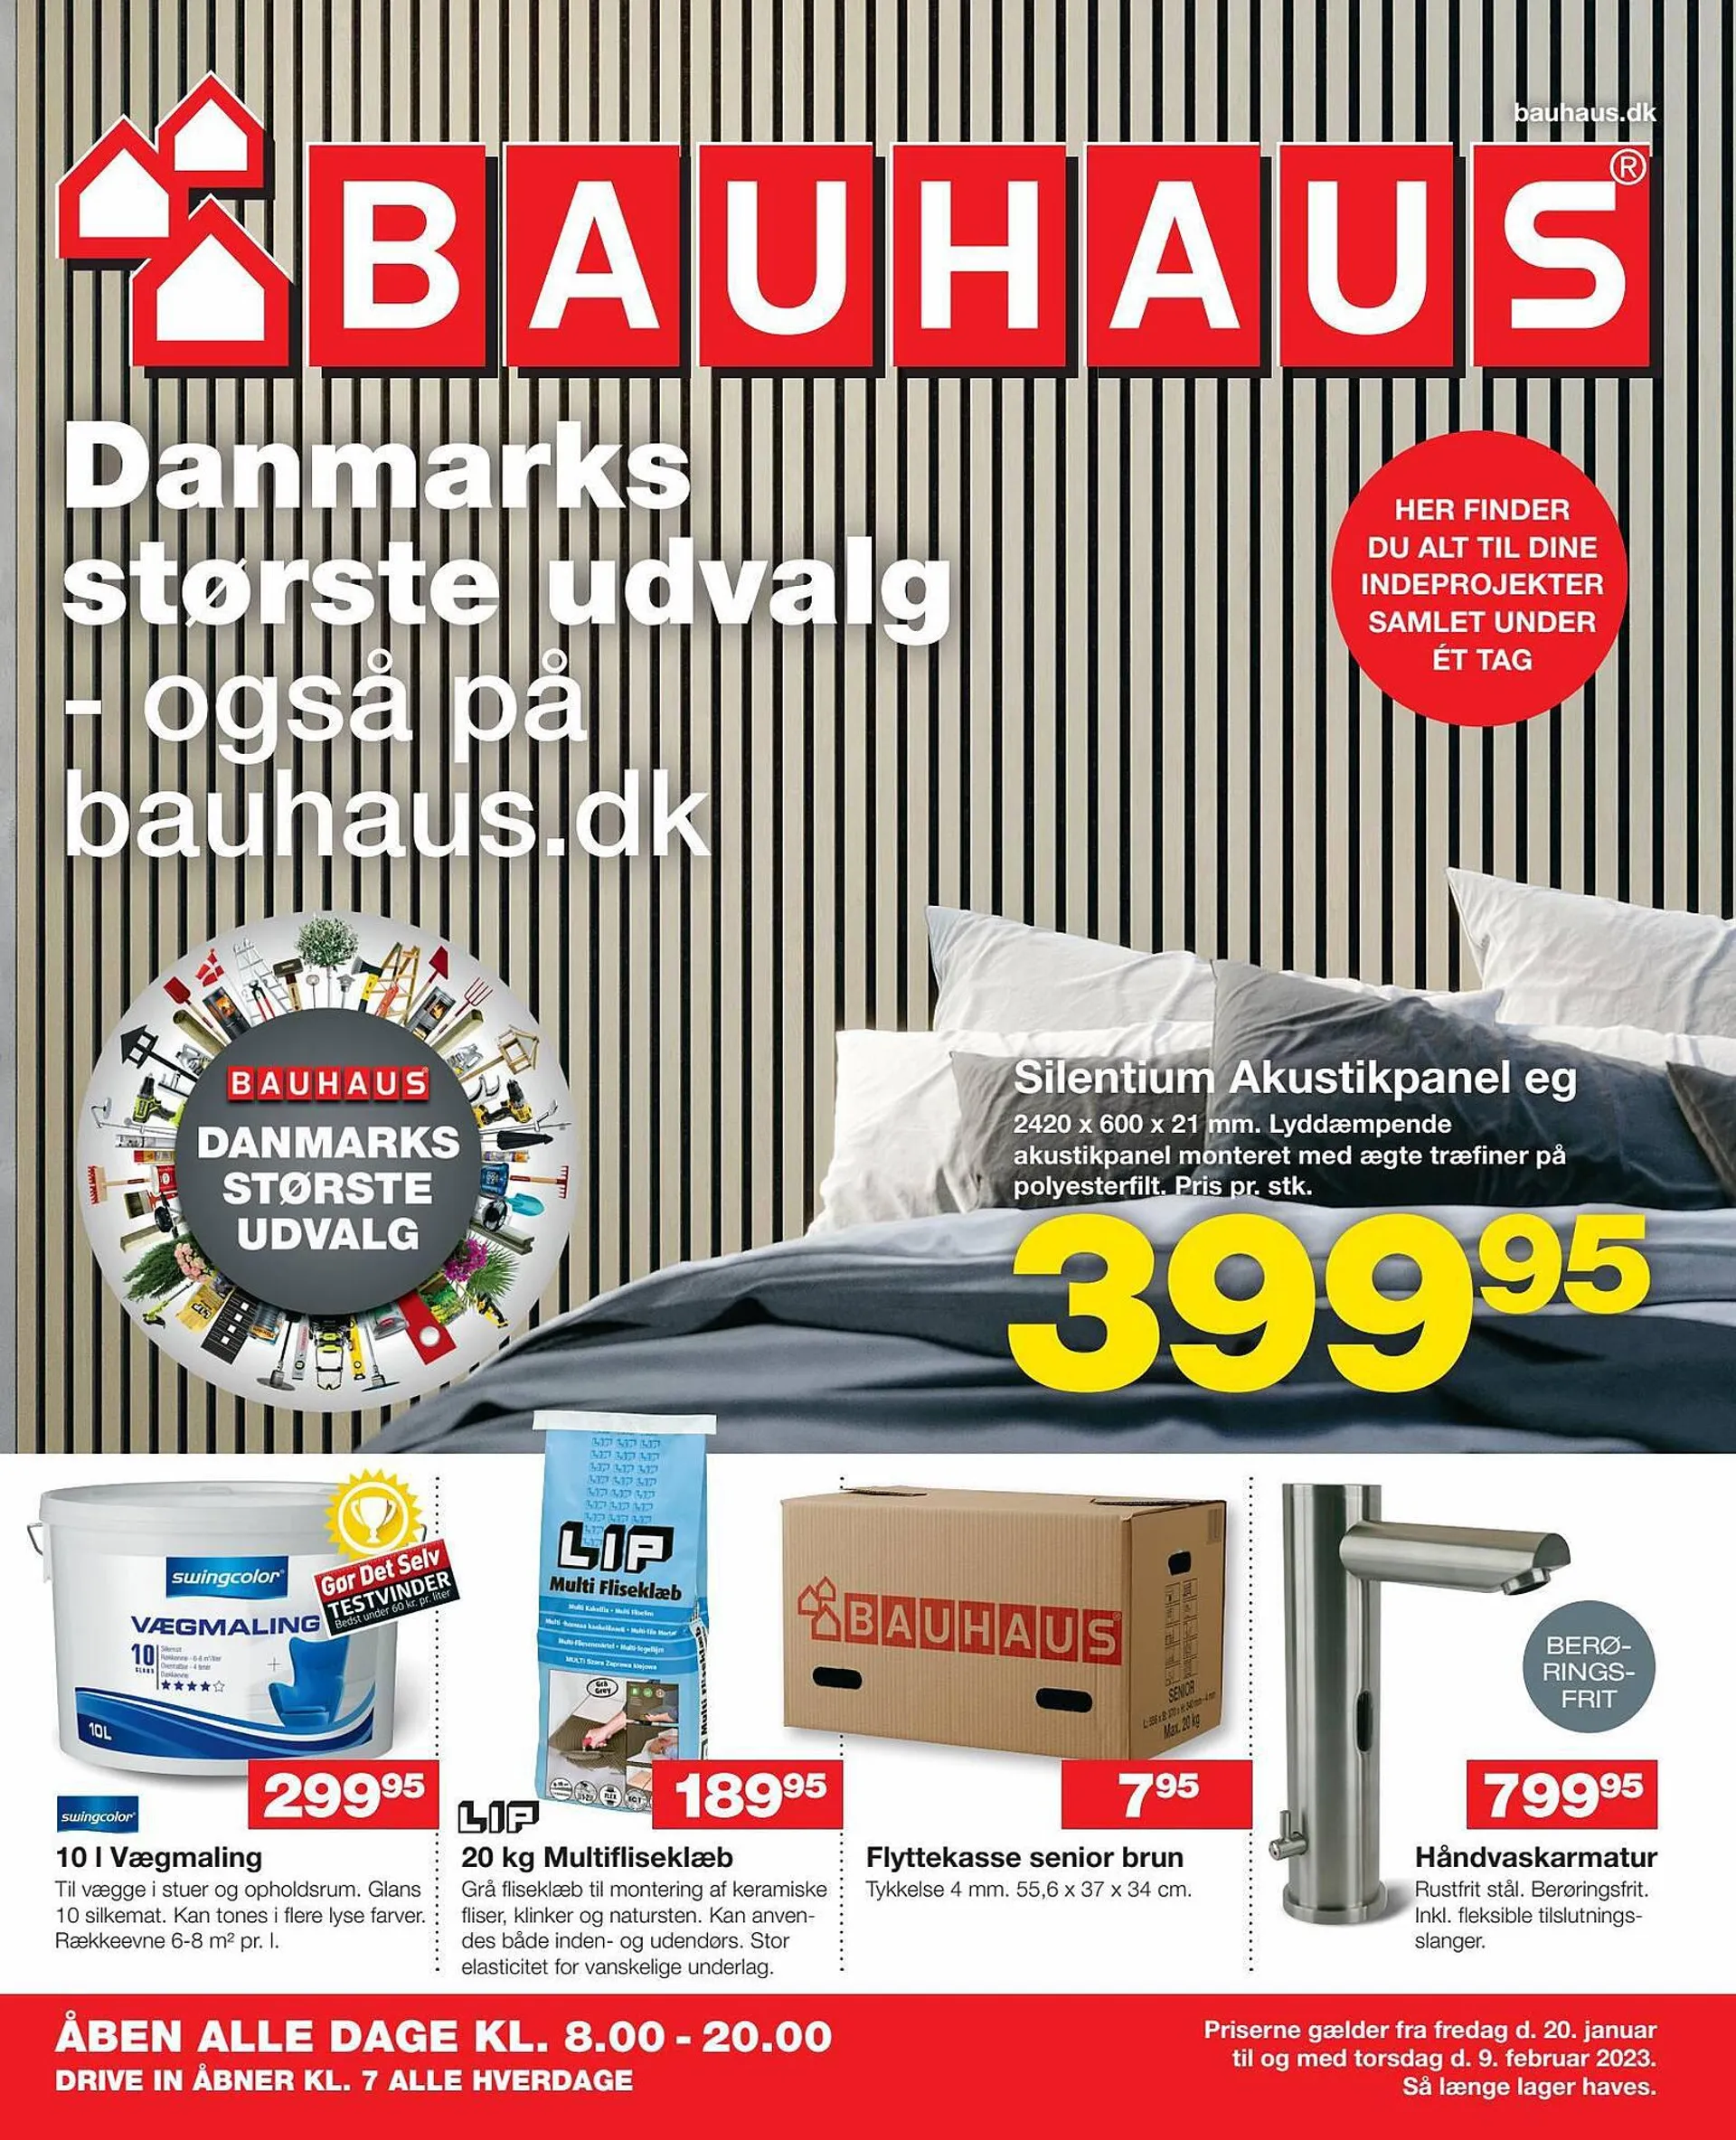 Bauhaus tilbudsavis - 1